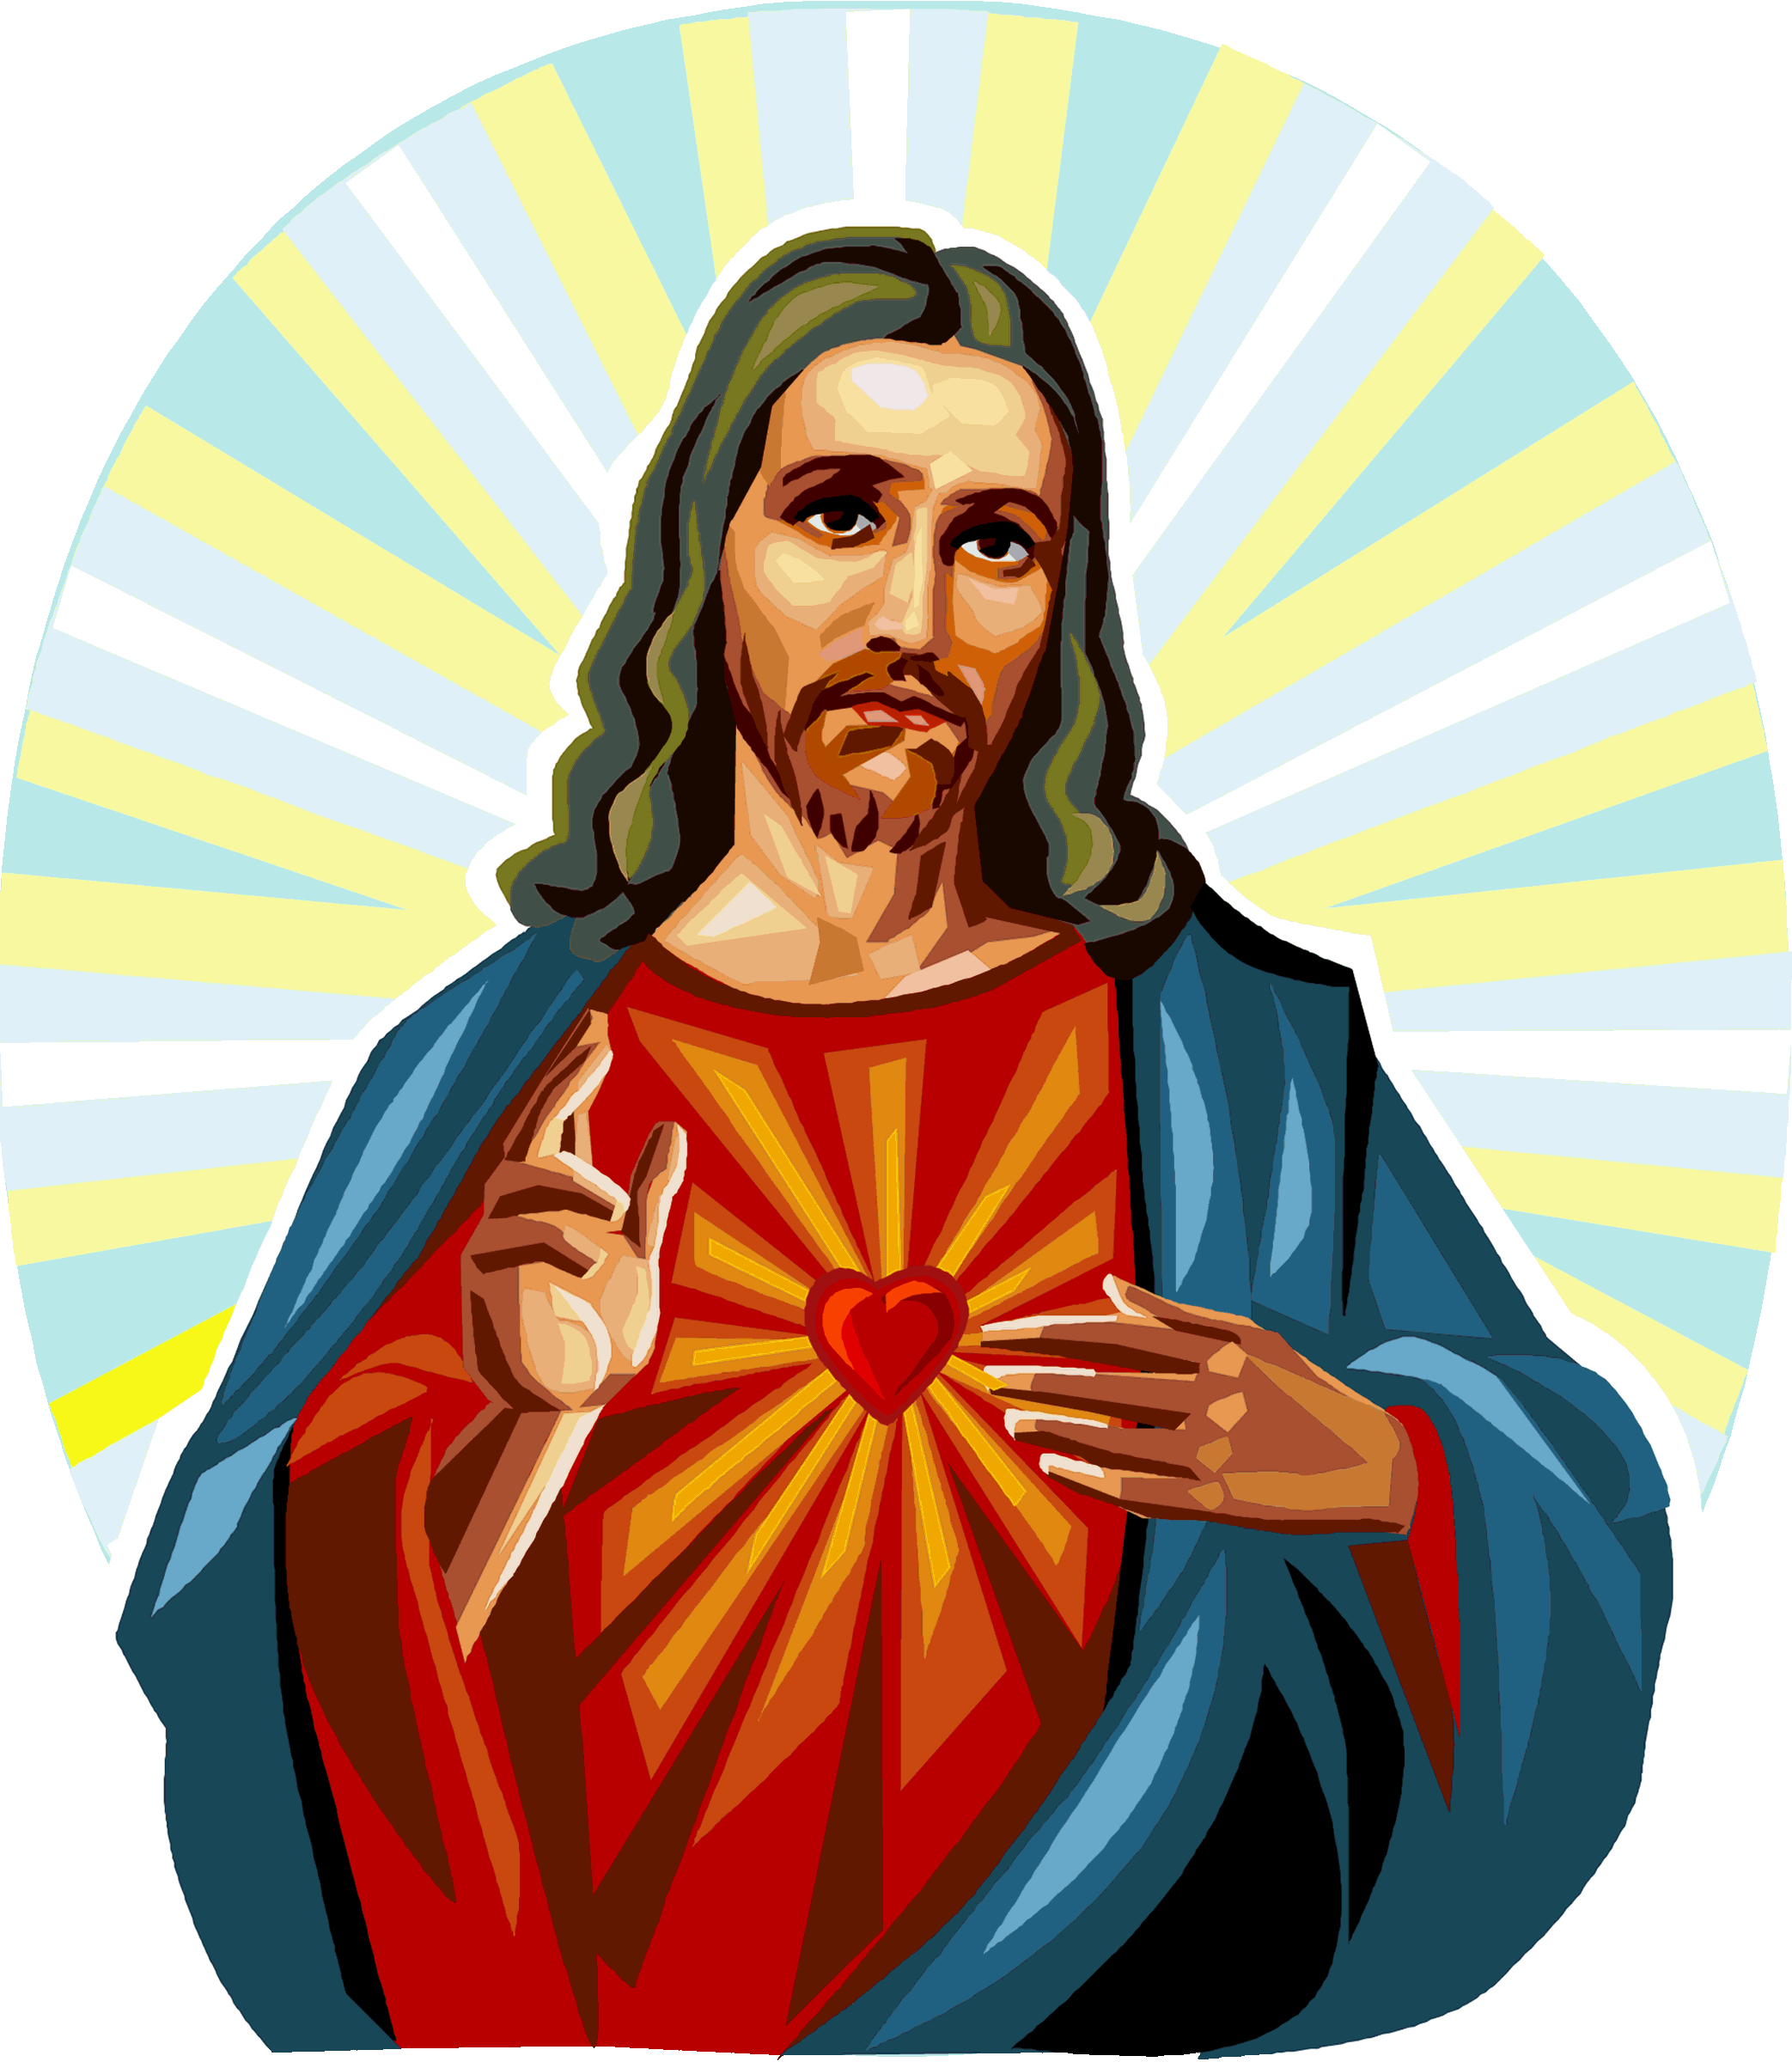 Free Transparent Jesus, Download Free Clip Art, Free Clip.